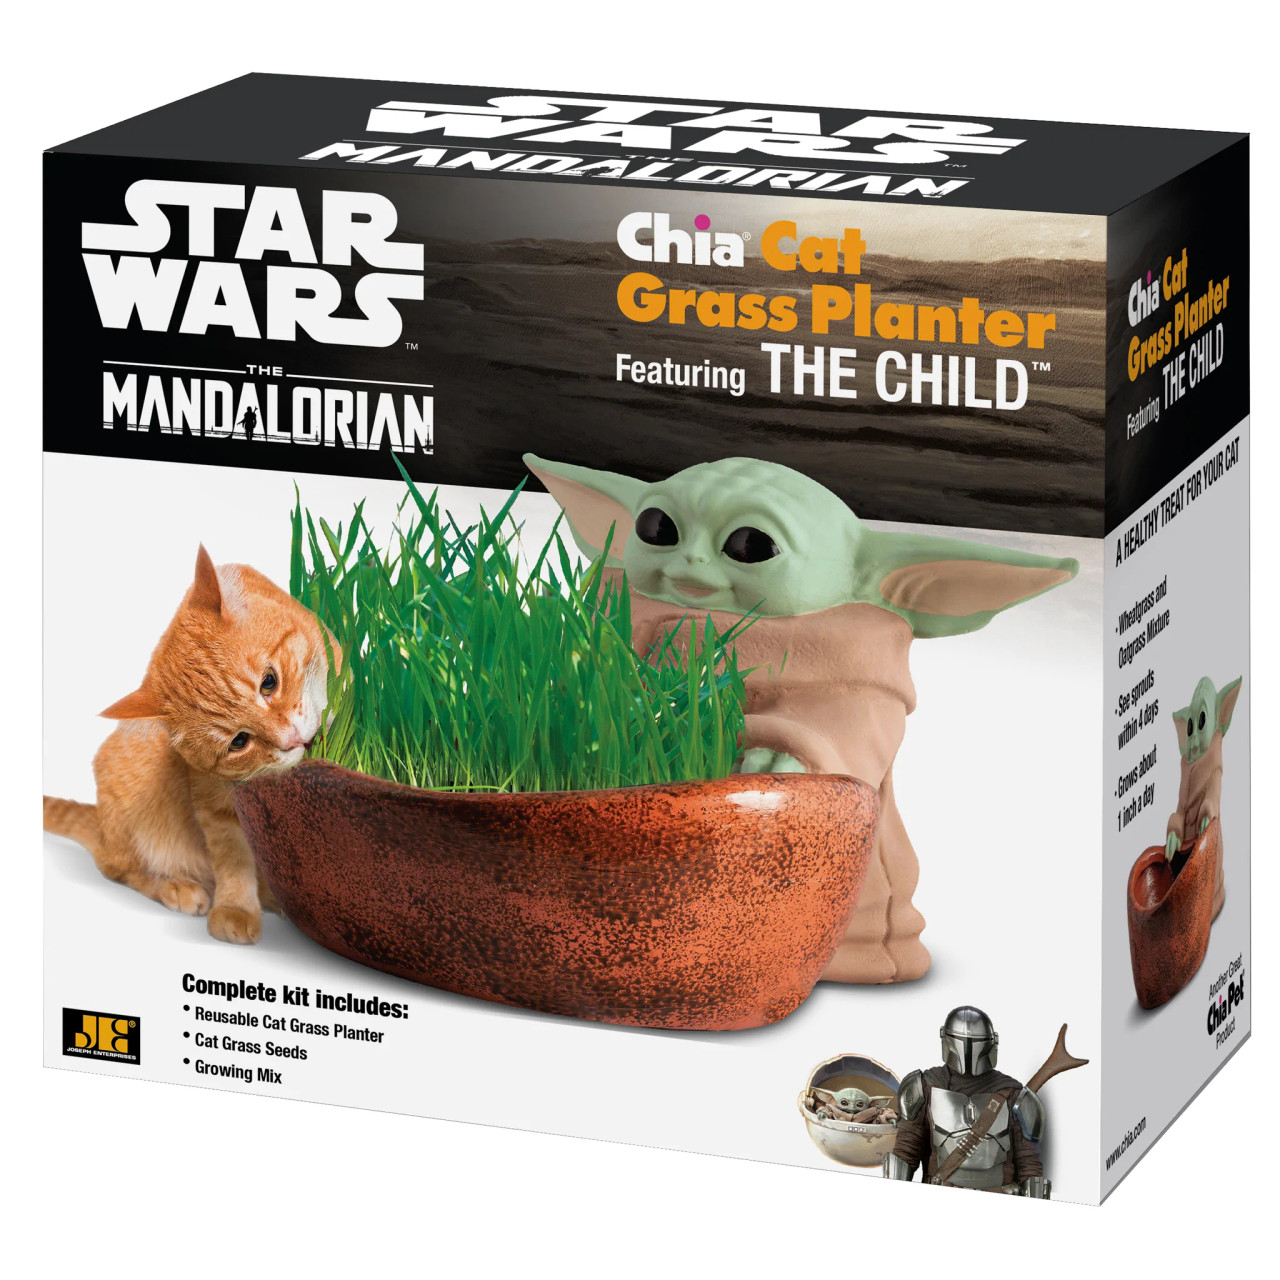 Chia Pet® Star Wars The Mandalorian The Child Decorative Planter, 1 ct -  Baker's